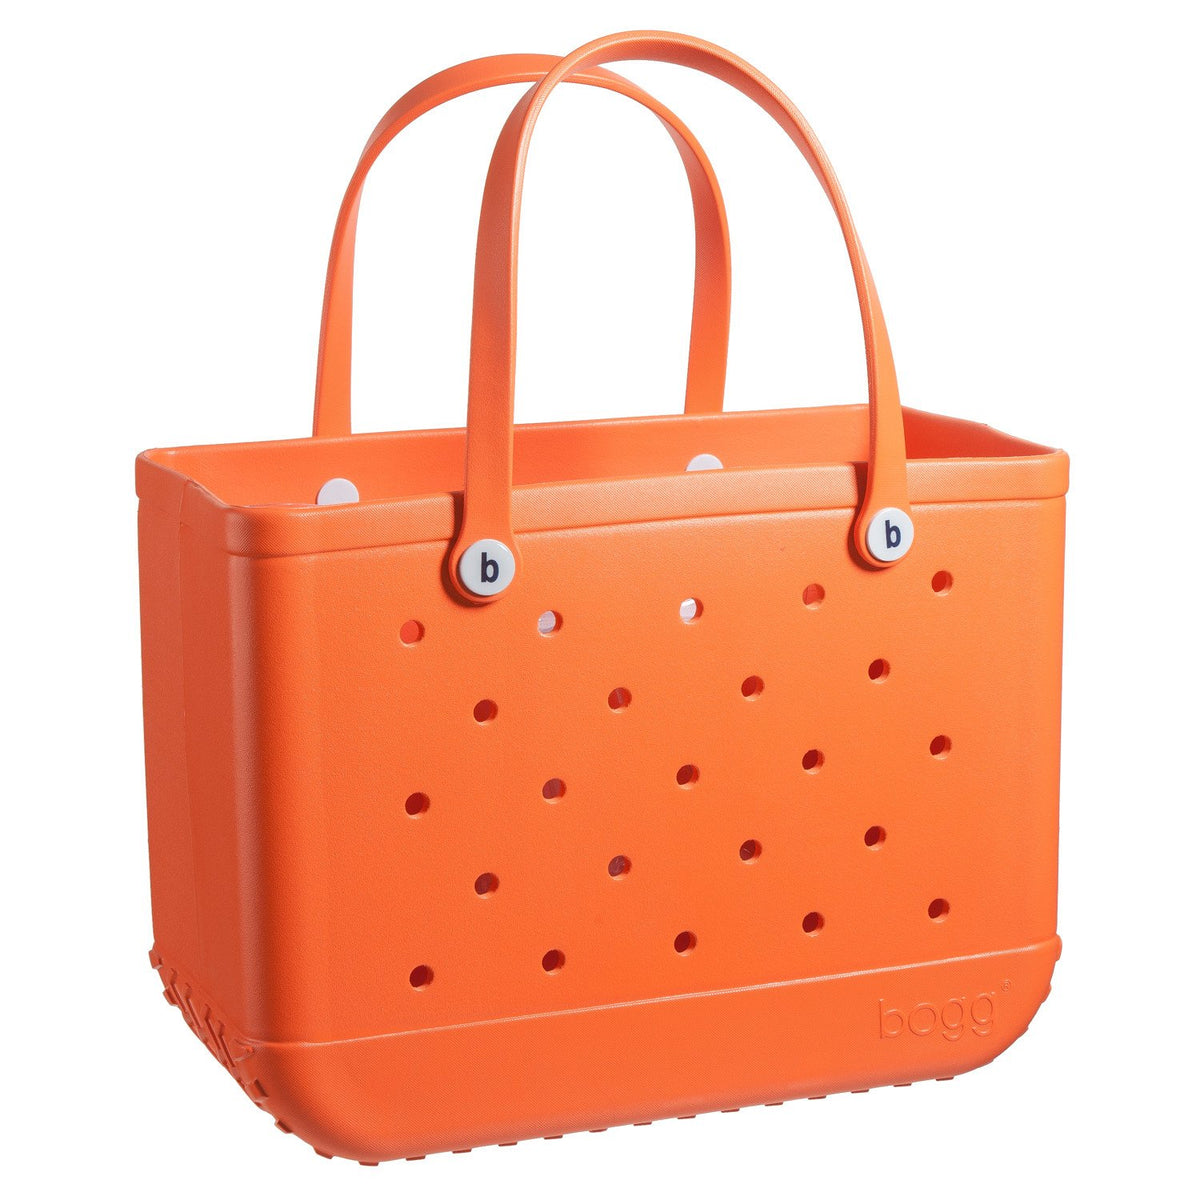 Original Bogg Bag in Orange 